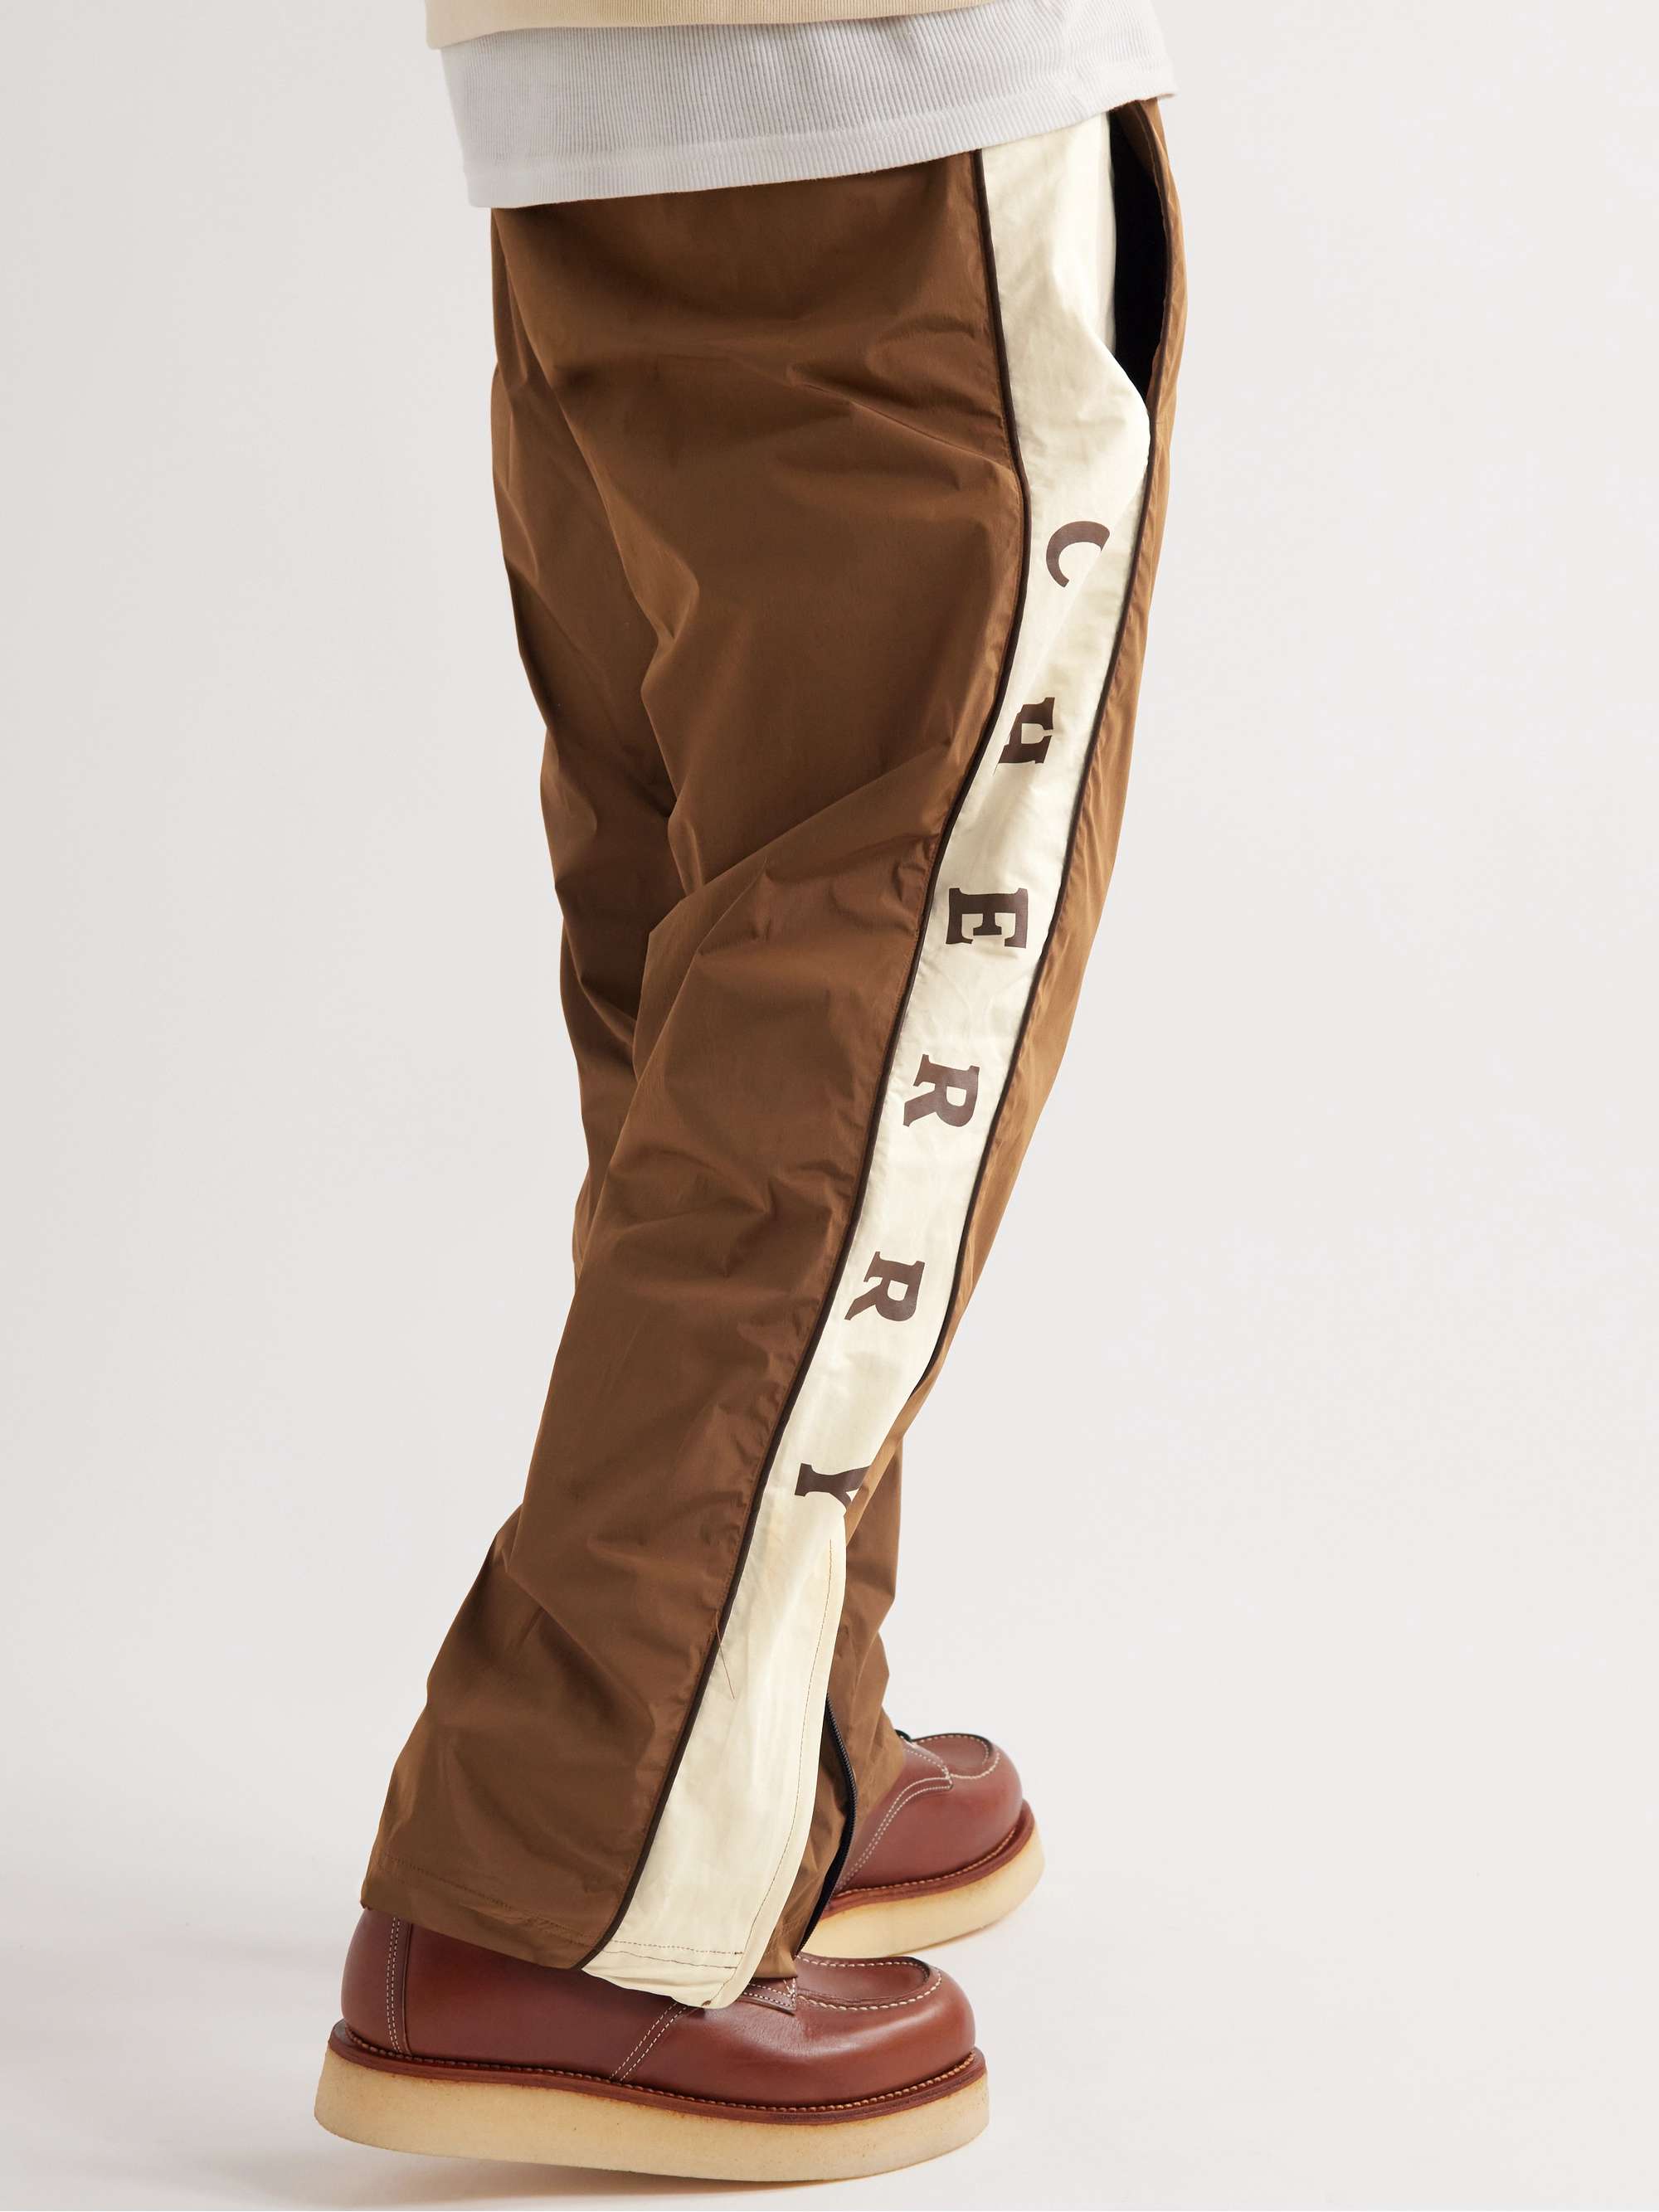 CHERRY LA Straight-Leg Logo-Print Recycled-Shell Track Pants